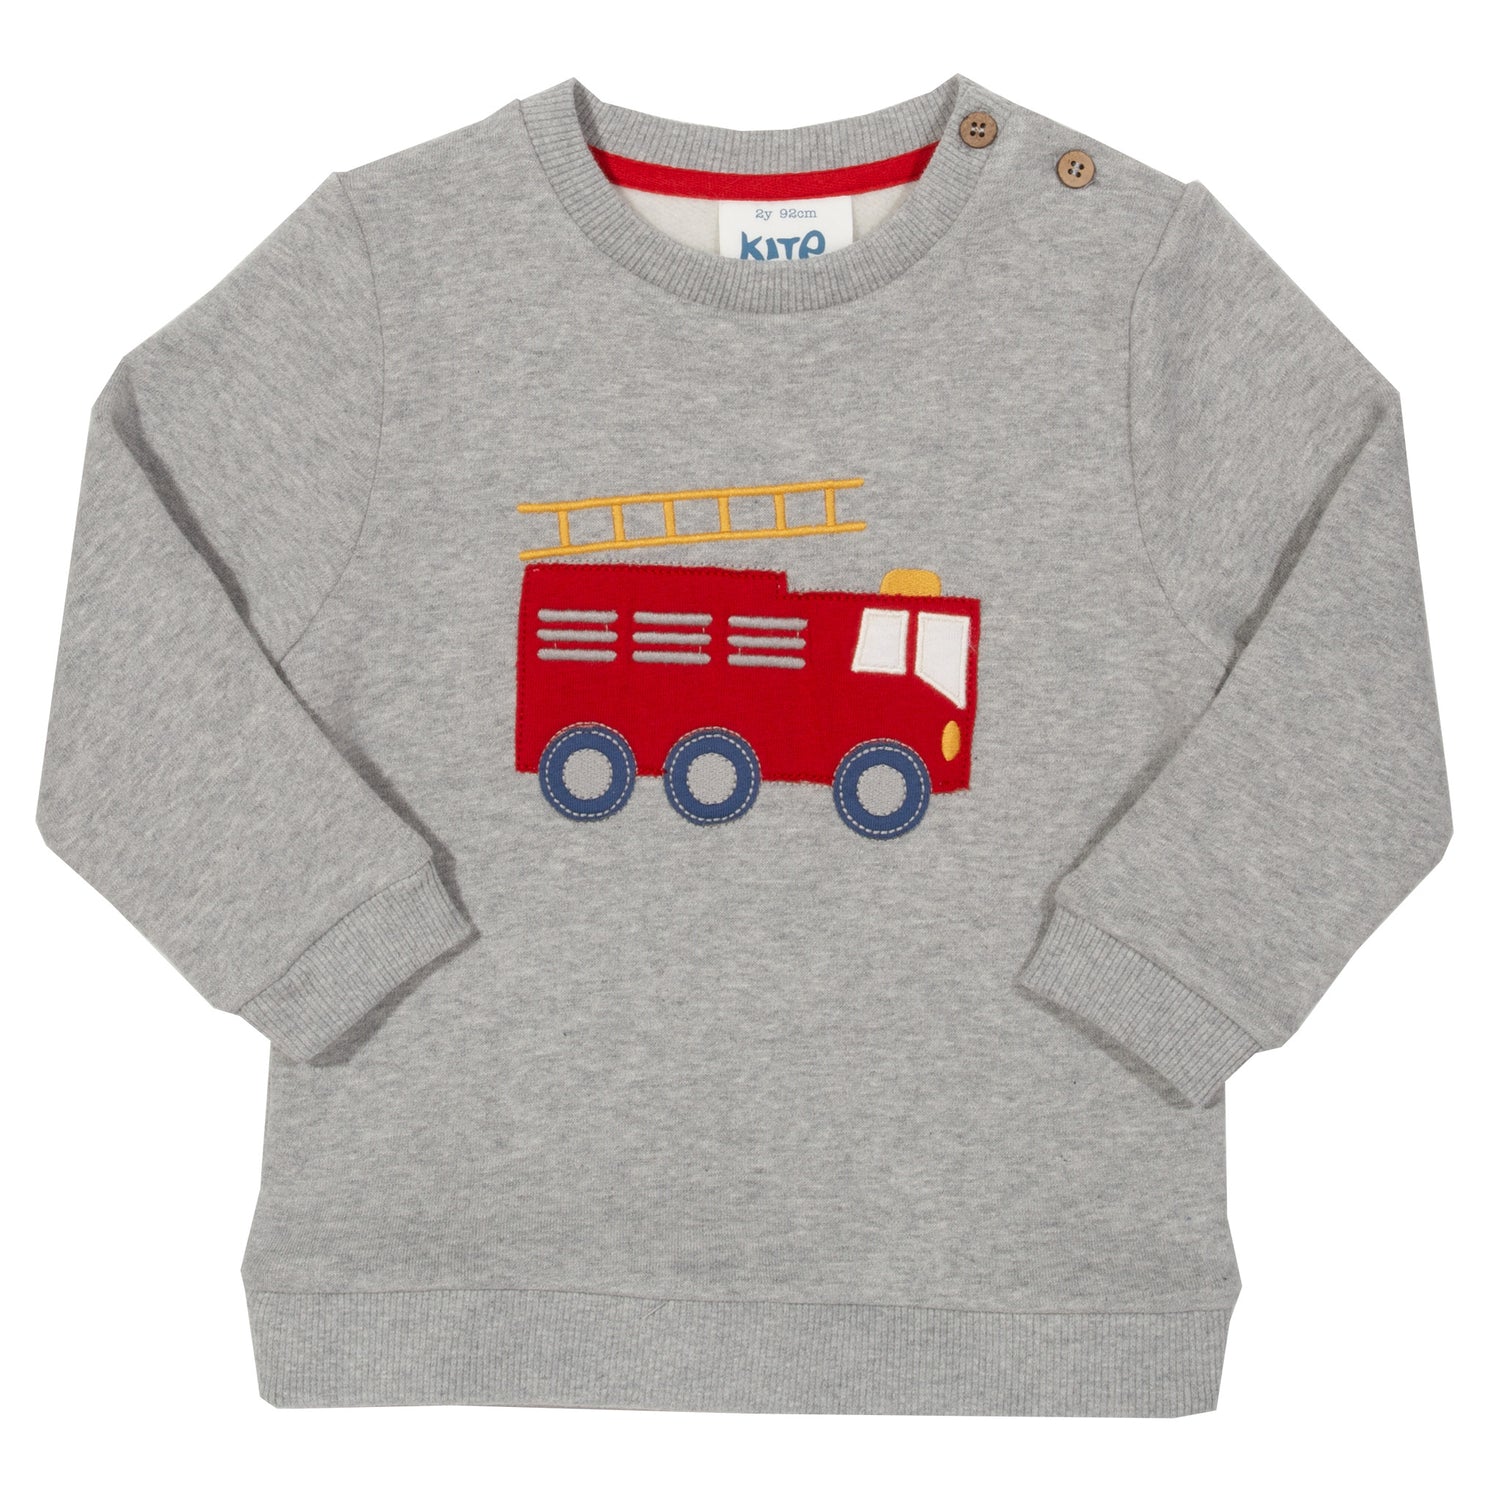 Grey sweatshirt with red fire engine